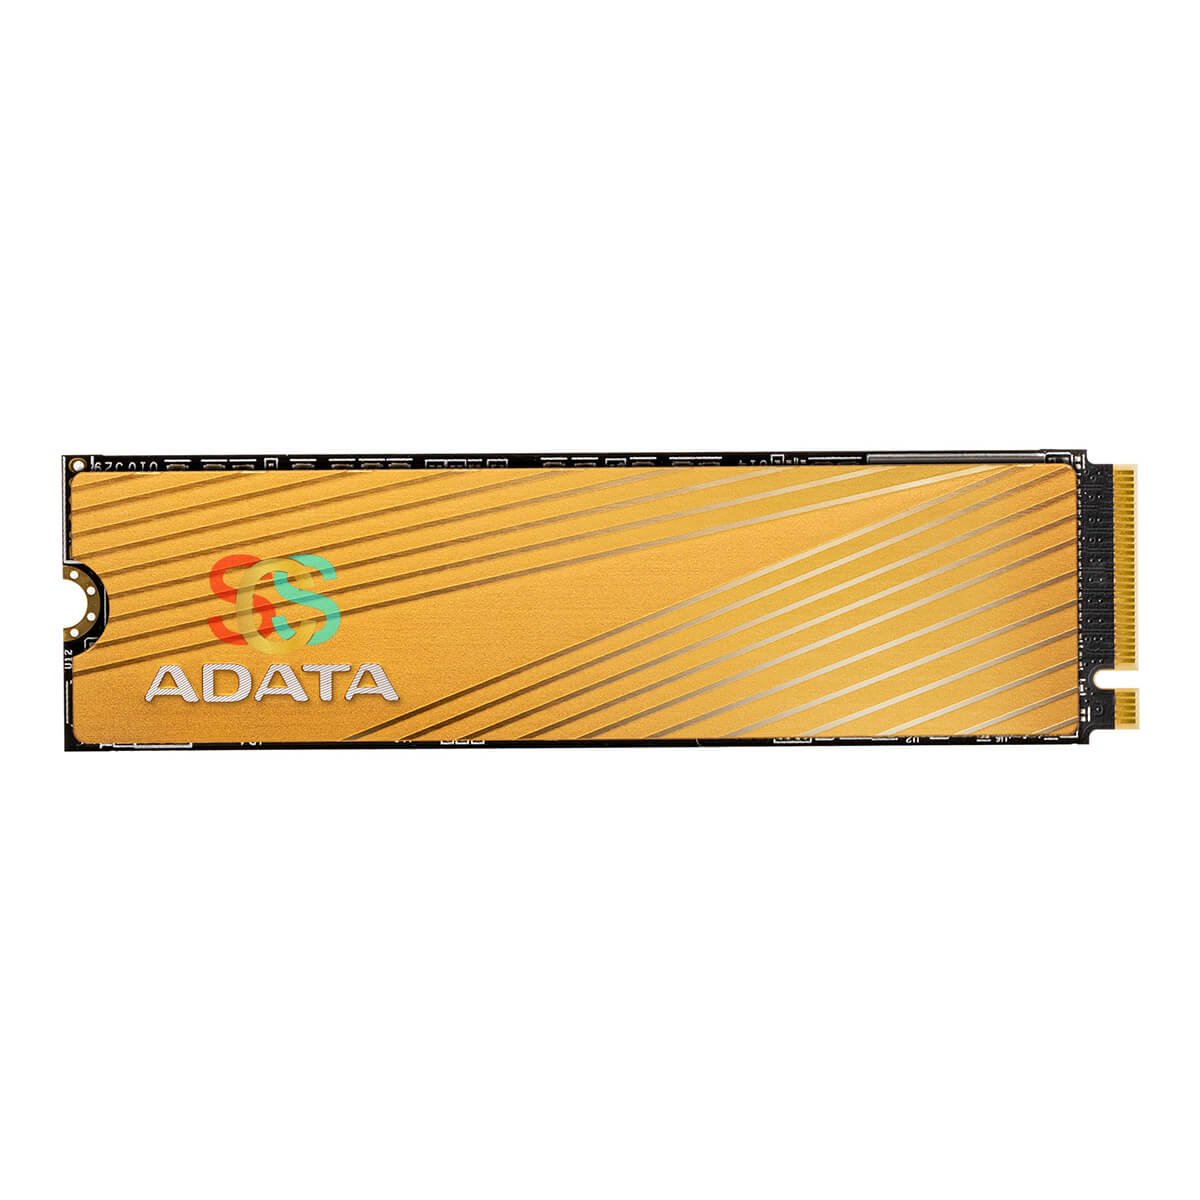 Adata FALCON 256GB M.2 2280 PCIe Gen3x4 SSD Drive